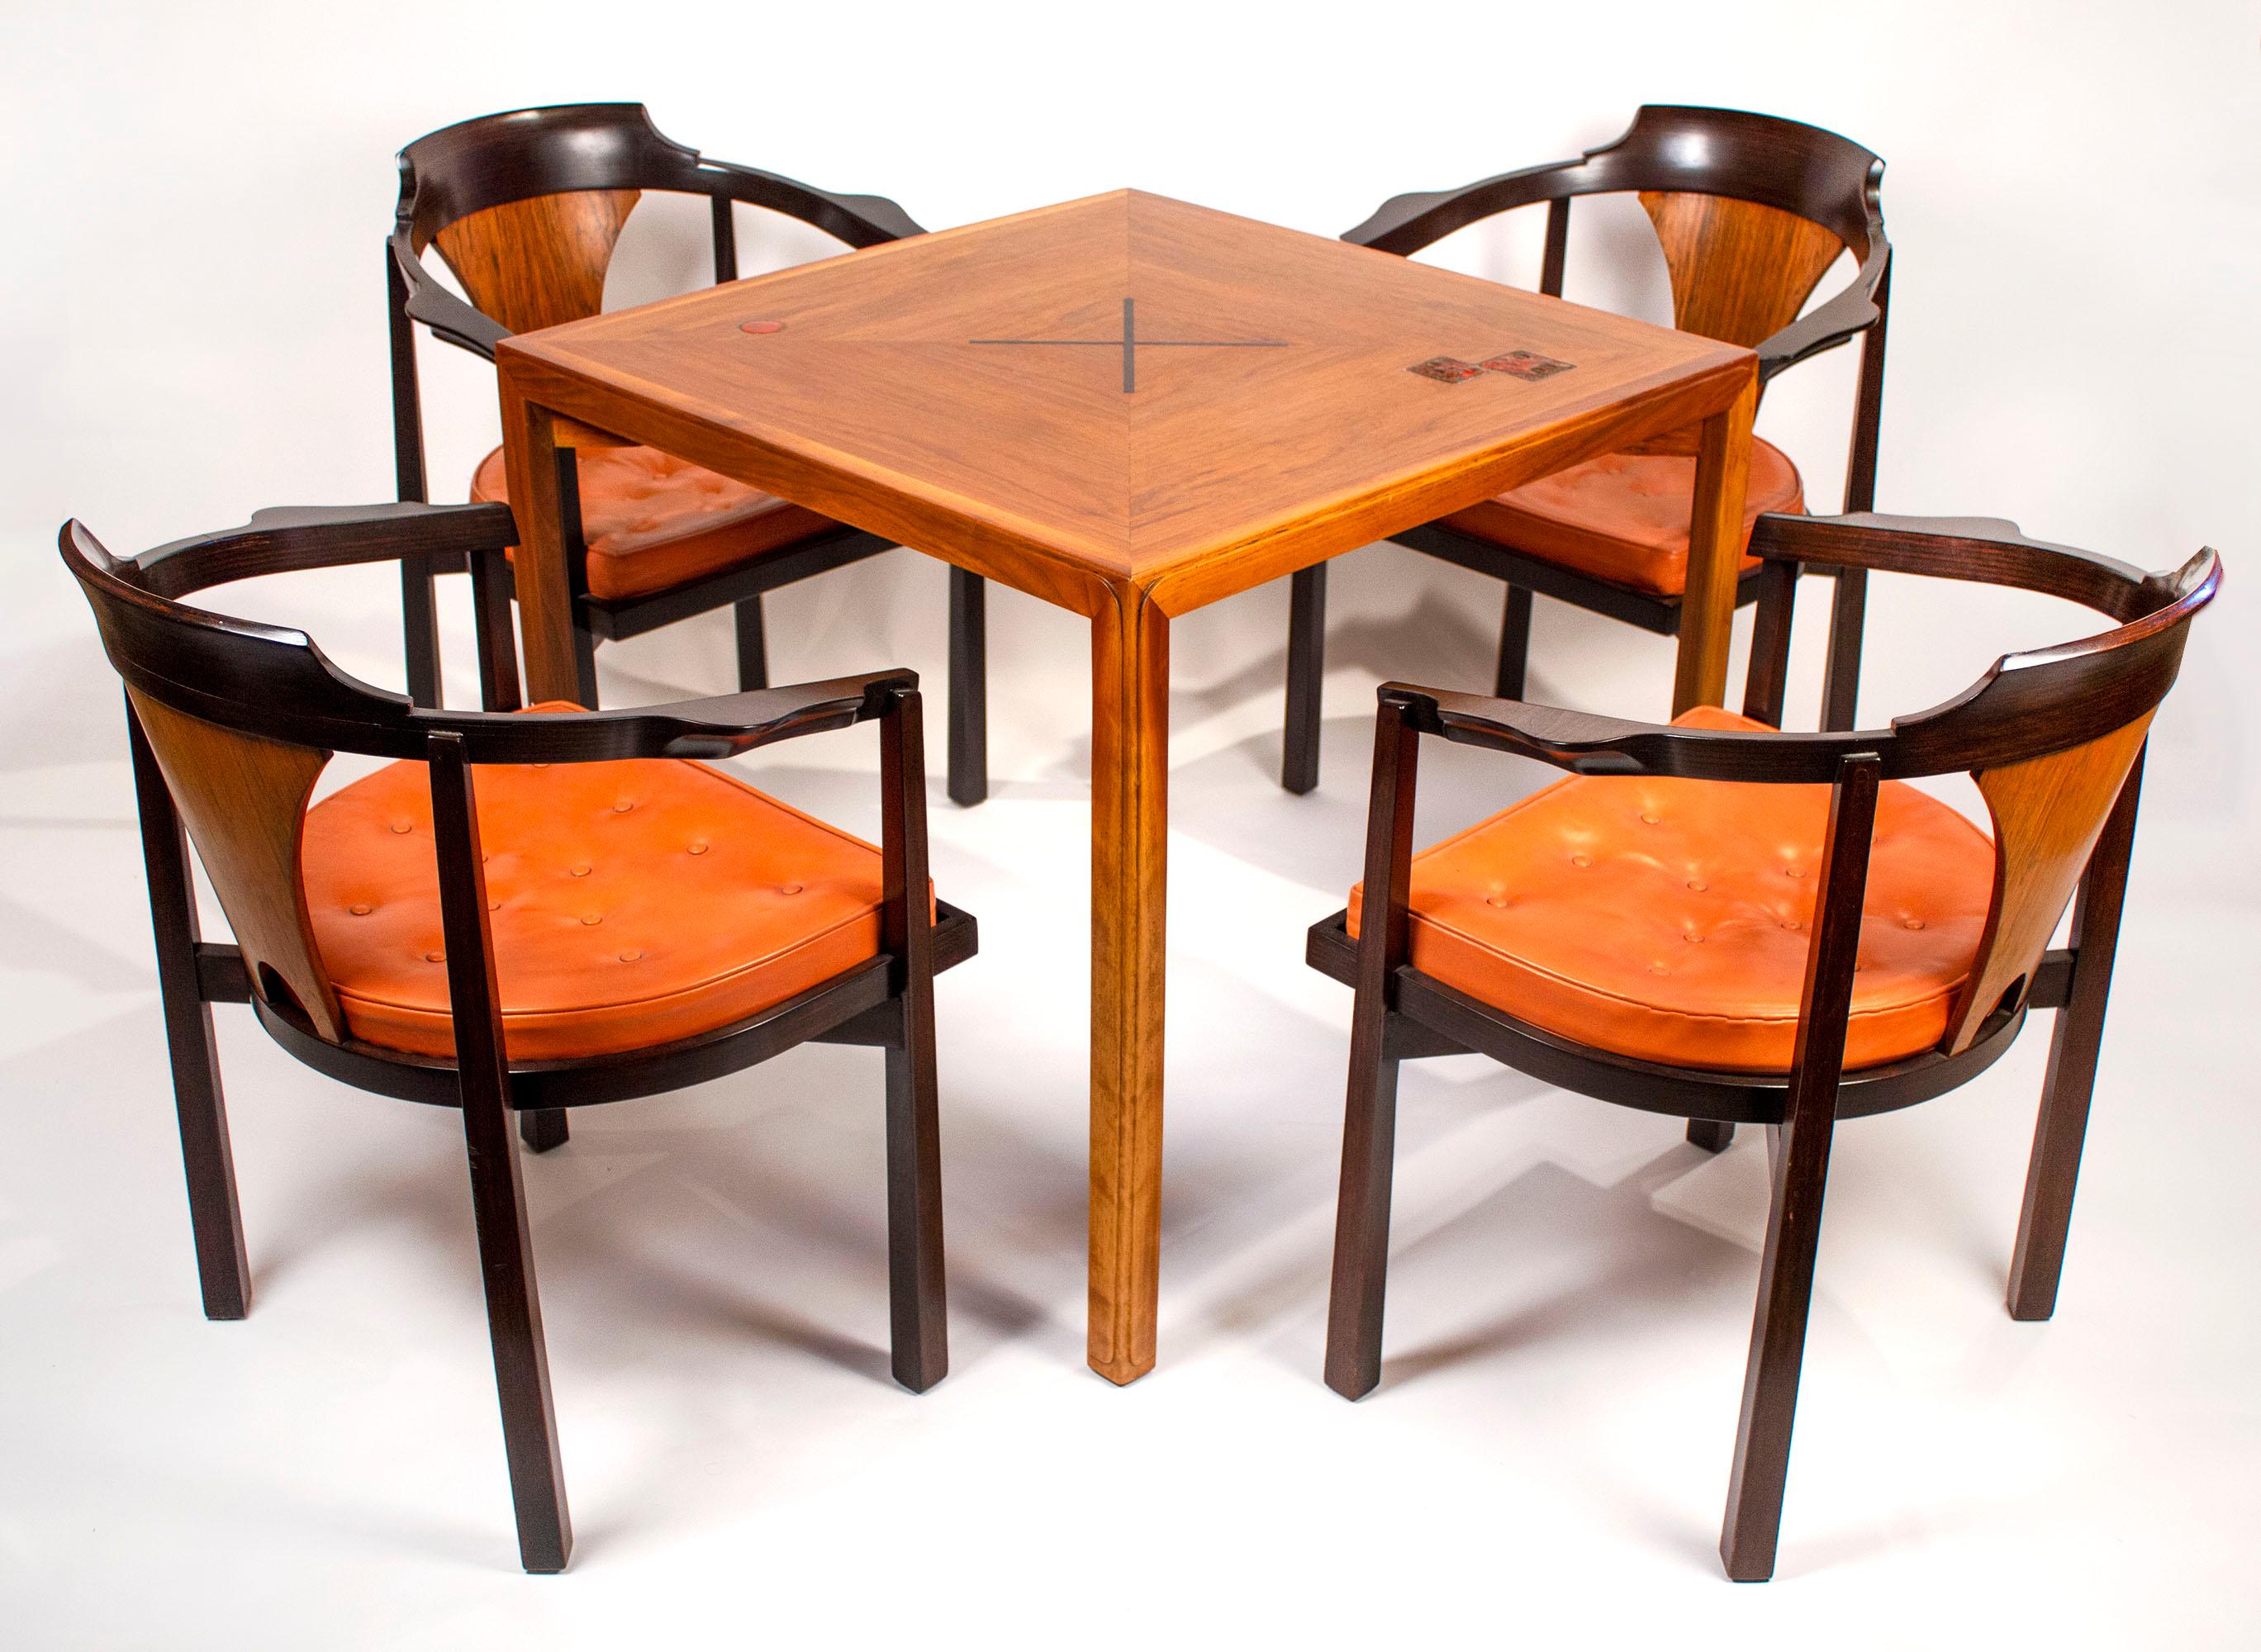 20th Century Edward Wormley Table & Chairs for Dunbar with Gertrude & Otto Natzler Tiles